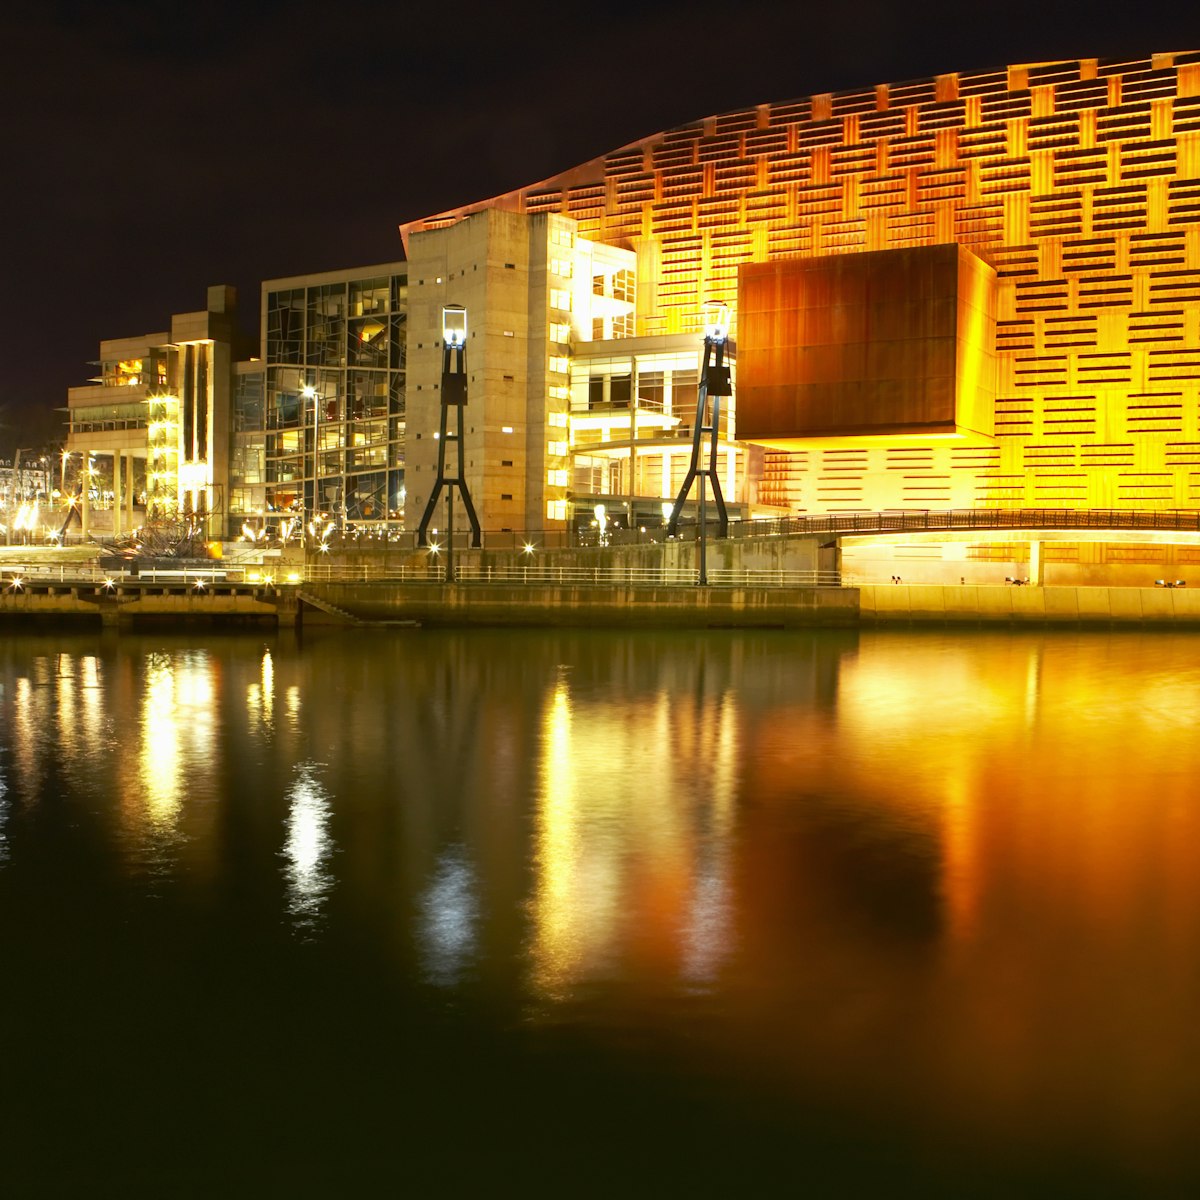 Spain, Bilbao, Museo Maritimo, Ria De Bilbao, illuminated at night